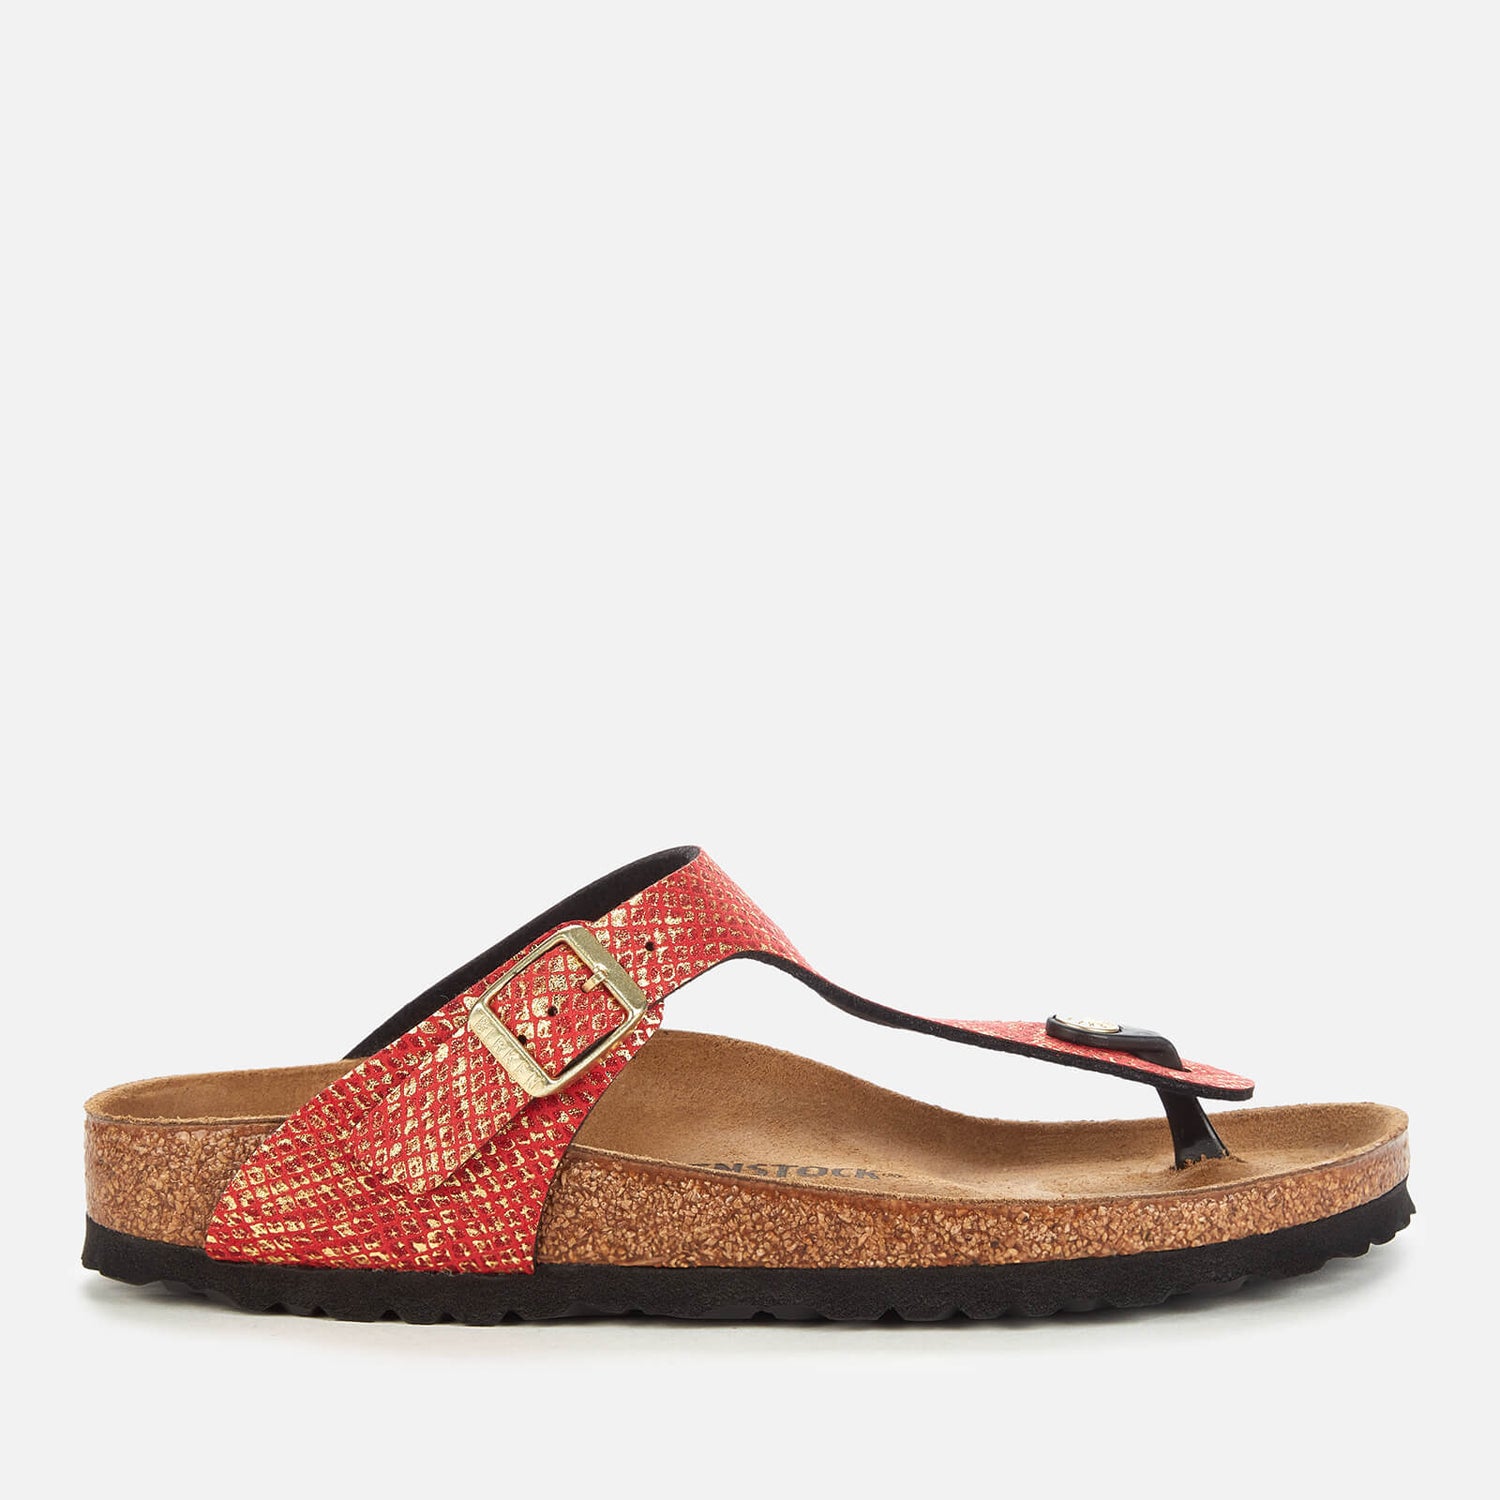 Birkenstock Women's Shiny Python Gizeh Toe-Post Sandals - Red